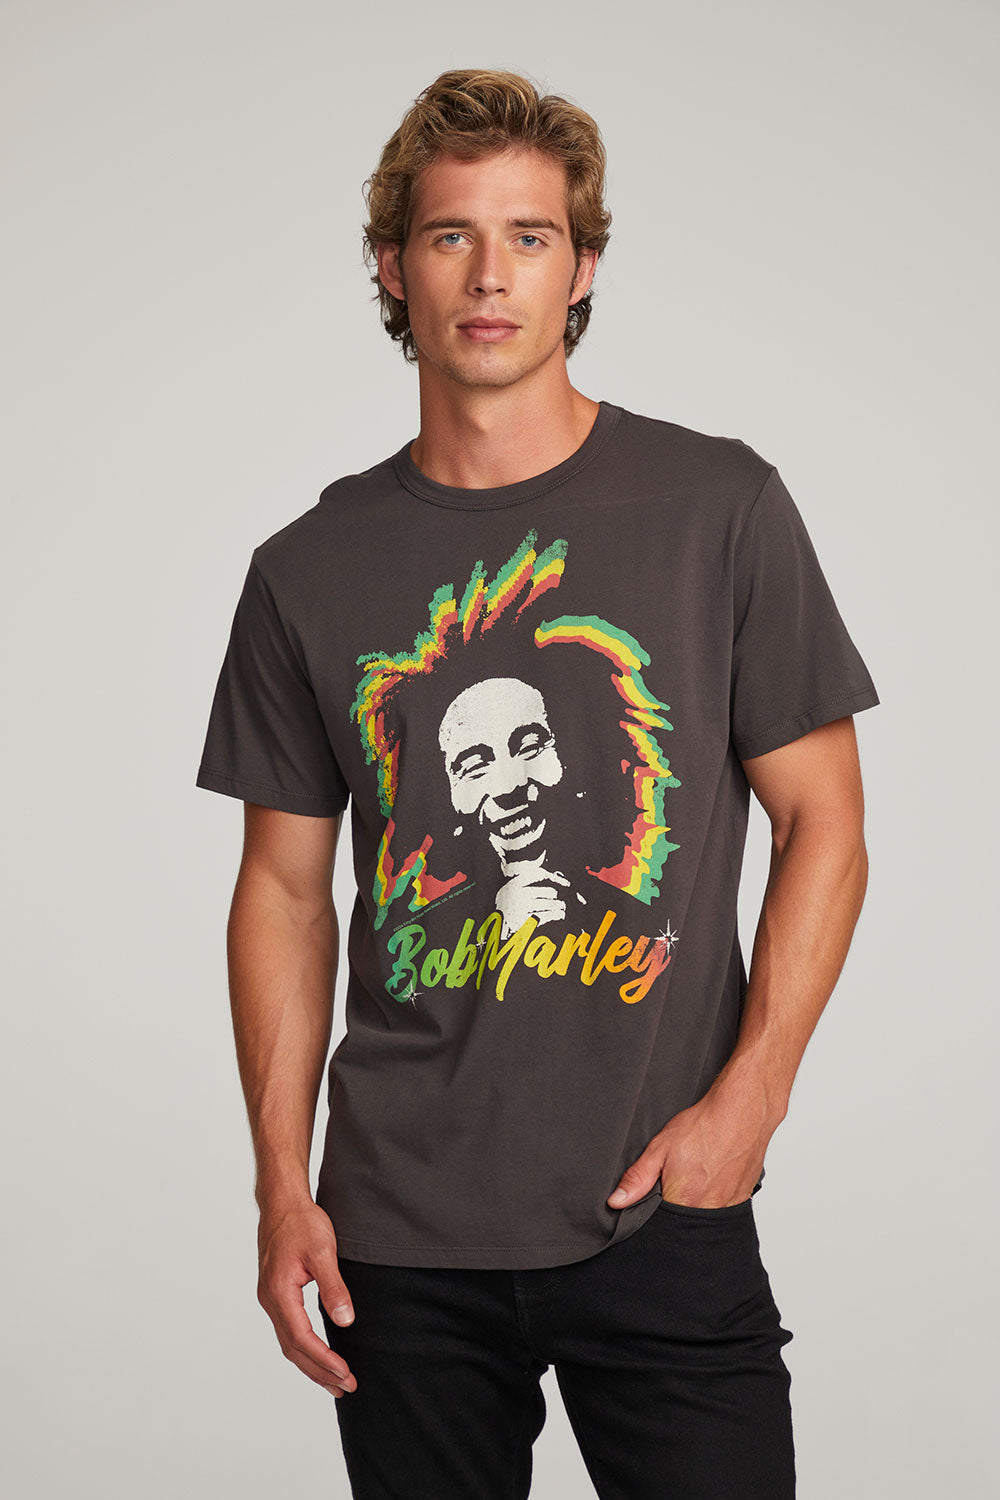 Bob Marley Rasta Vibes MENS chaserbrand